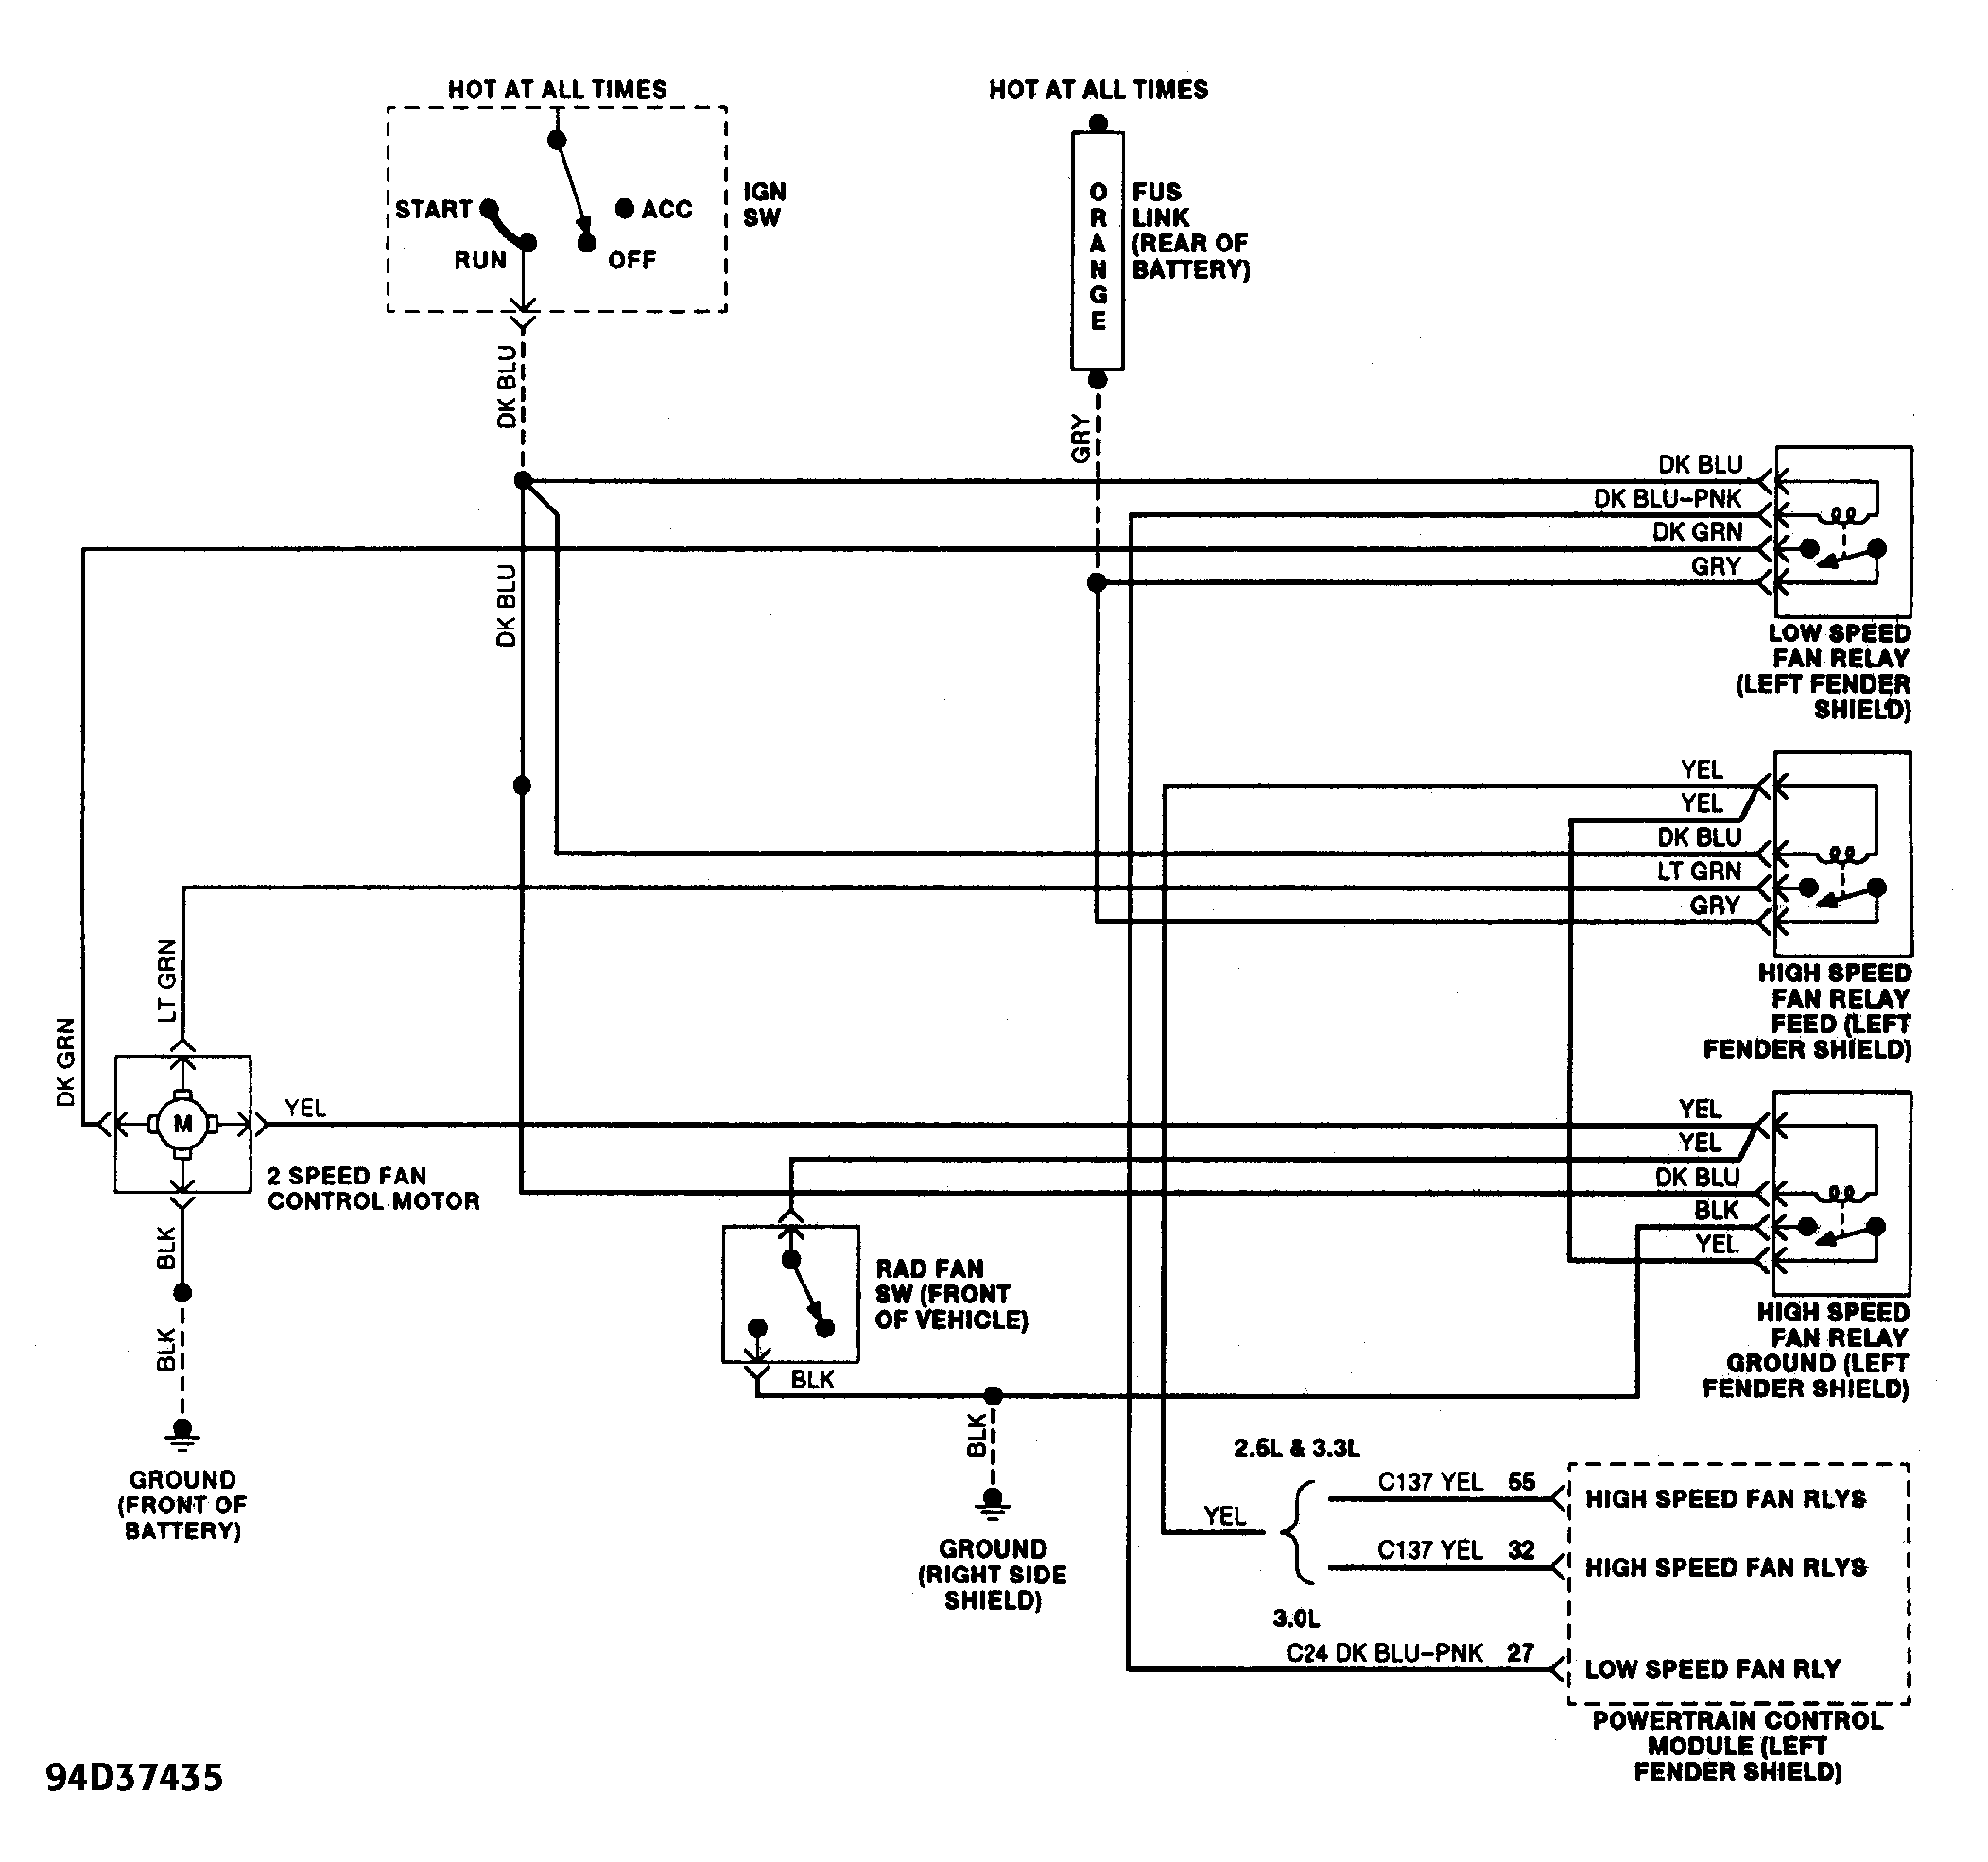 Fan Motor Diagram 1994 Dodge Caravan: I Need Diagram of the Plug